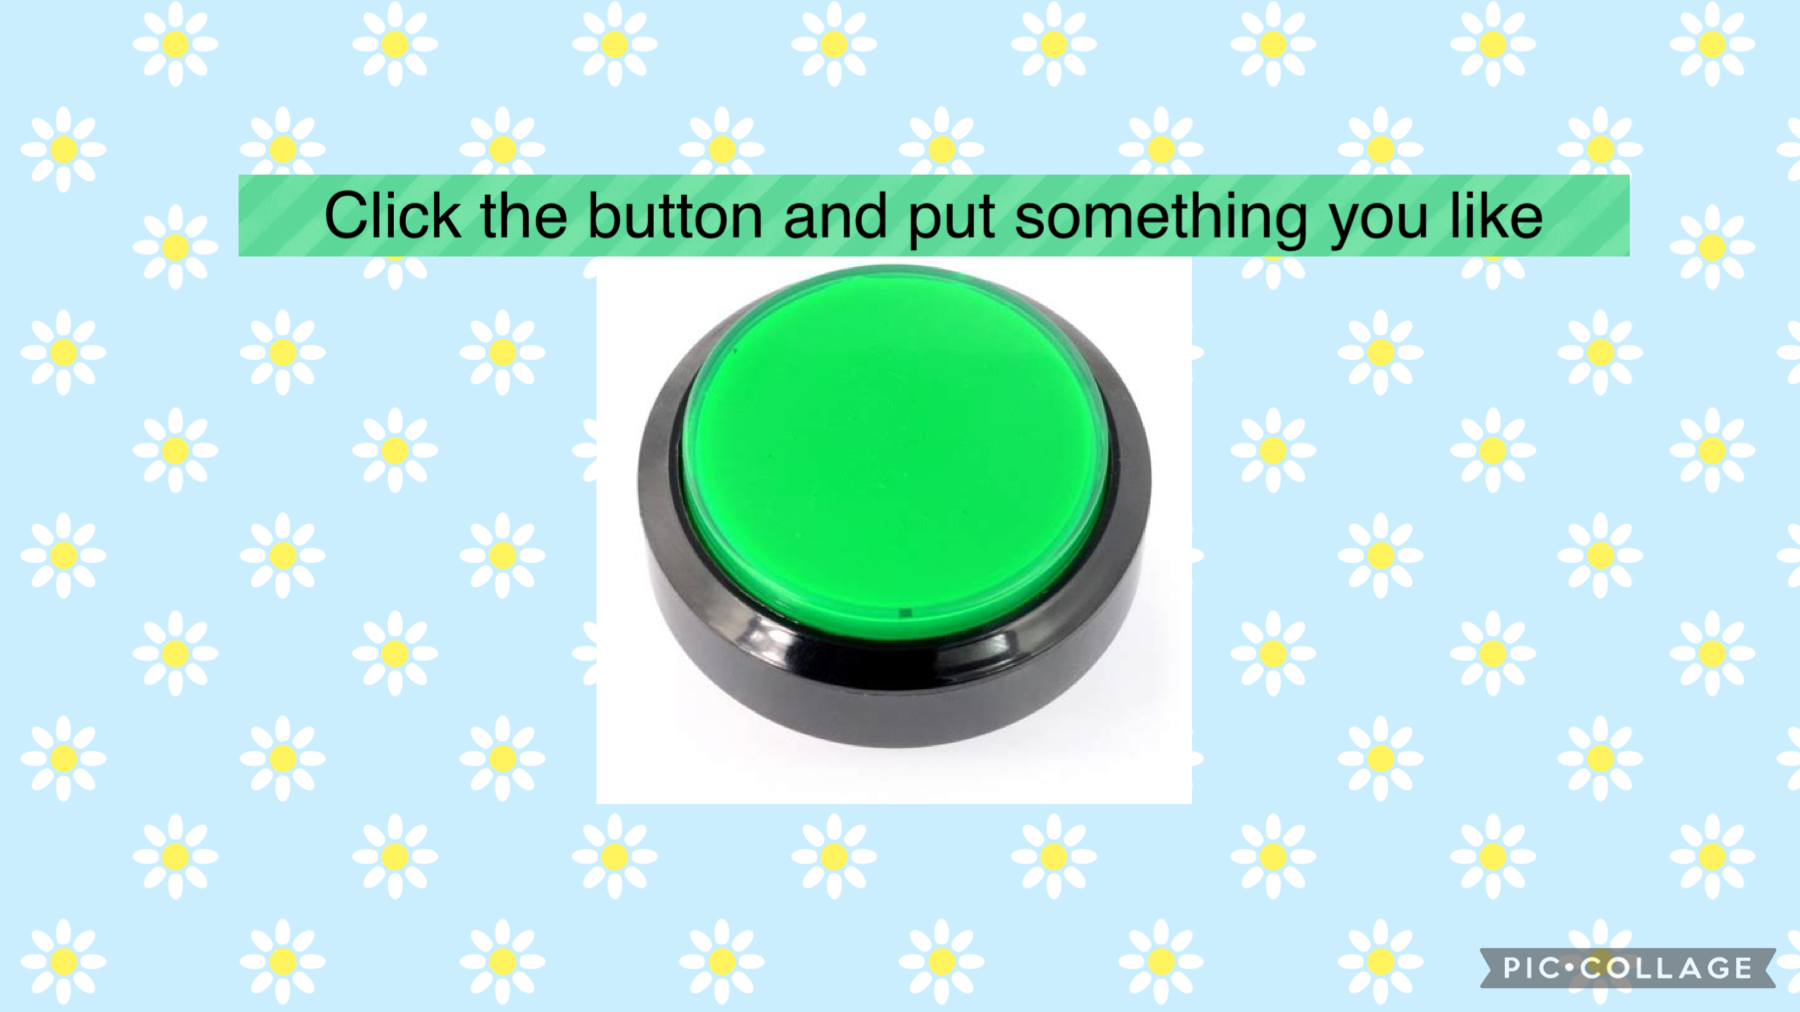 Click the button